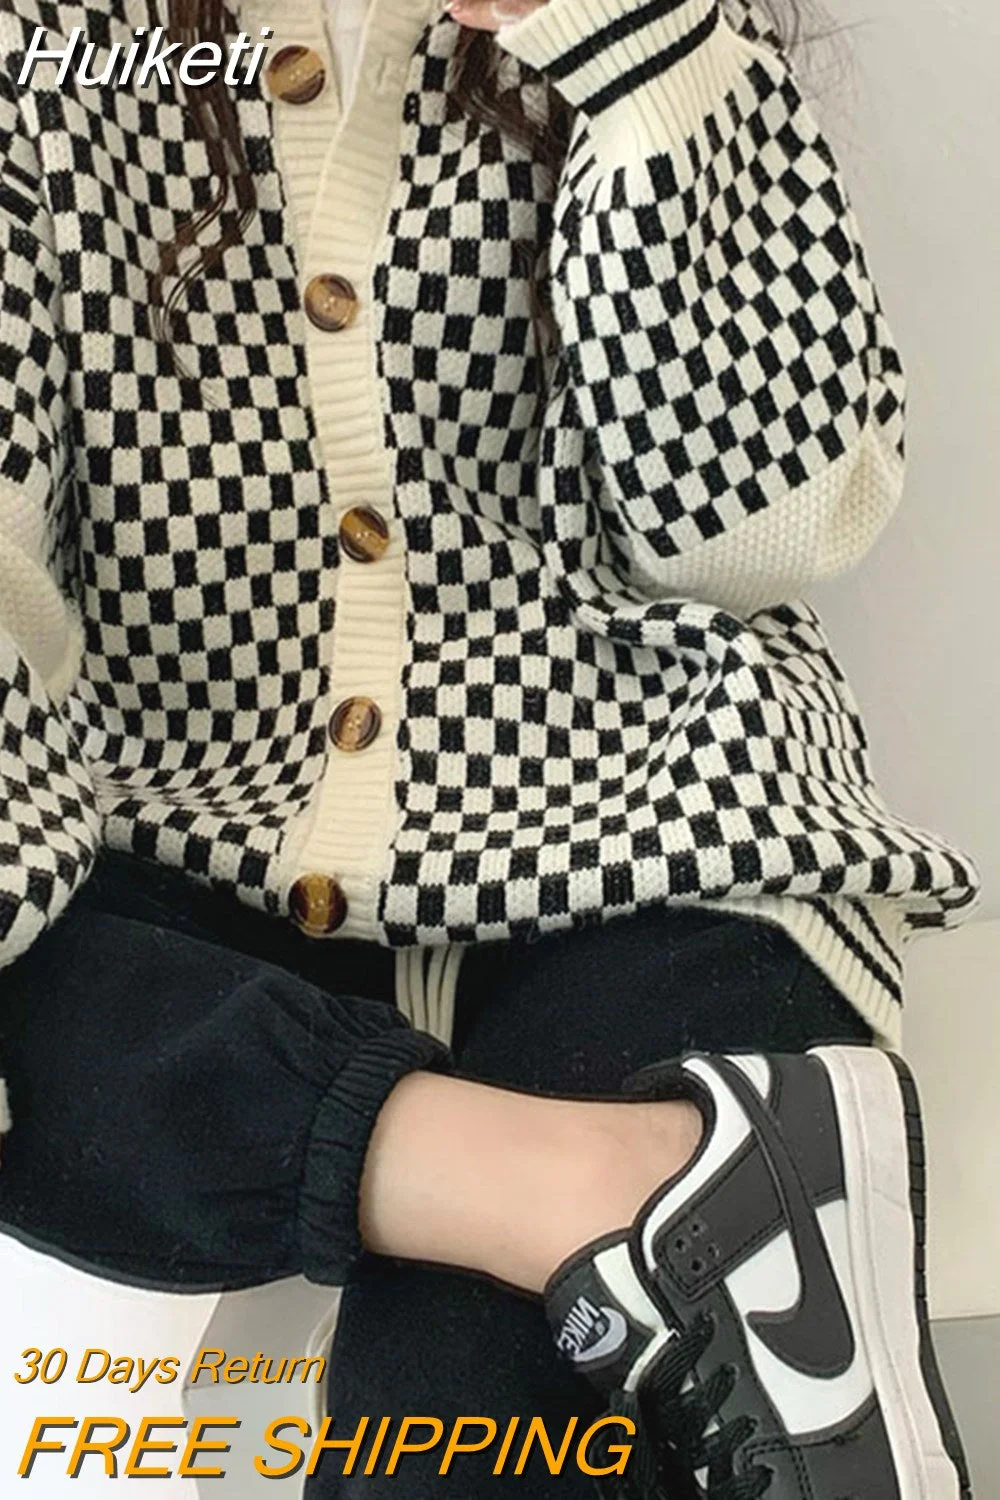 Huiketi Black White Plaid Sweater Women Retro Long Sleeve Buttons Knitted Cardigan Fashion Chessboard Korean Loose Warm Jacket